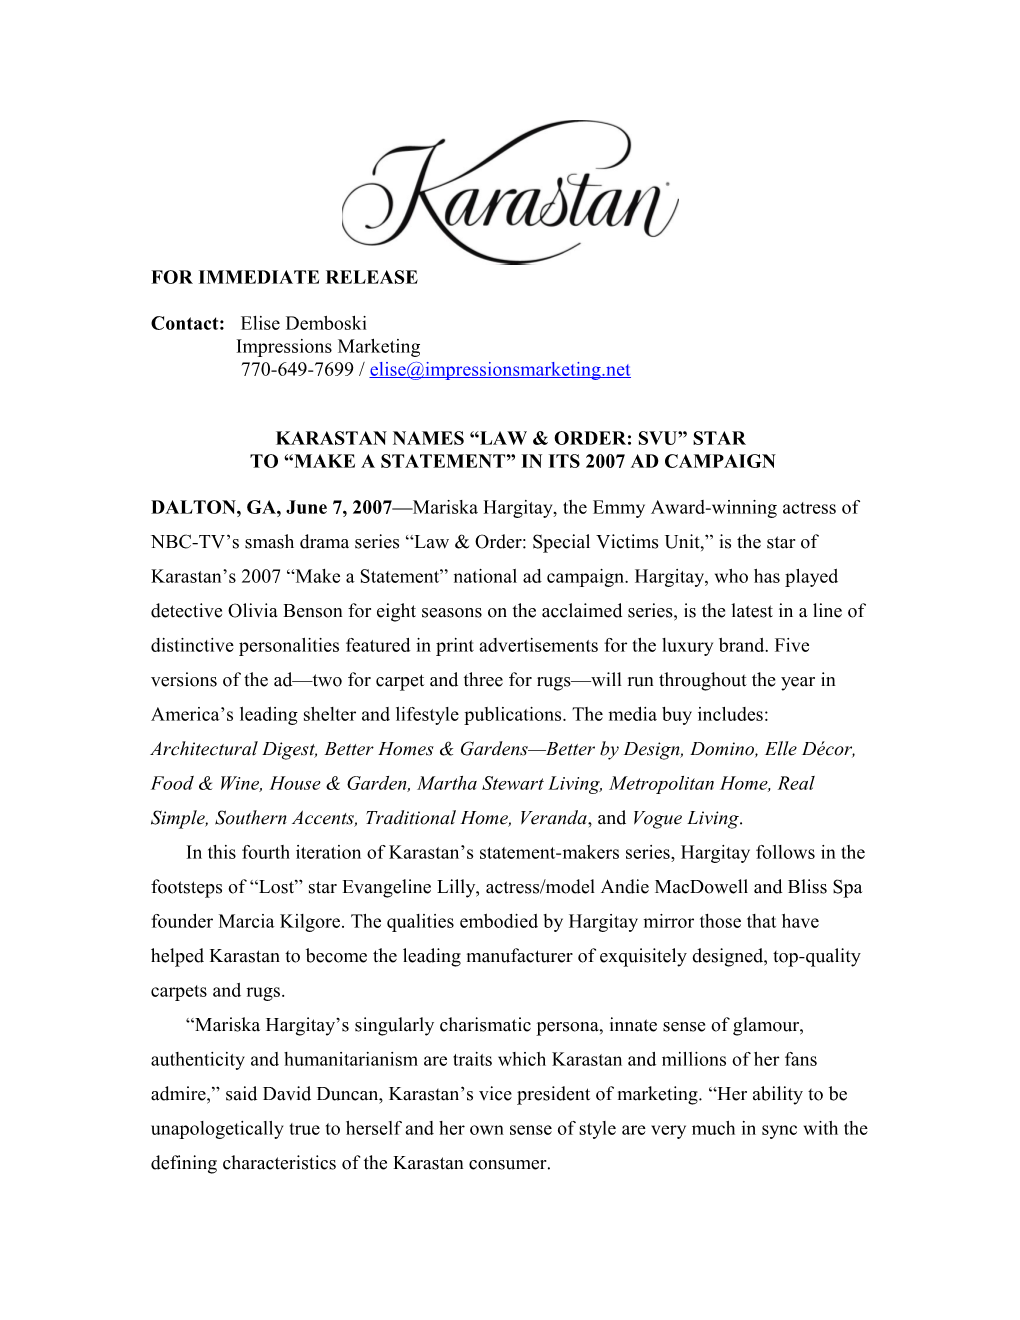 Karastan Names Law & Order: Svu Star